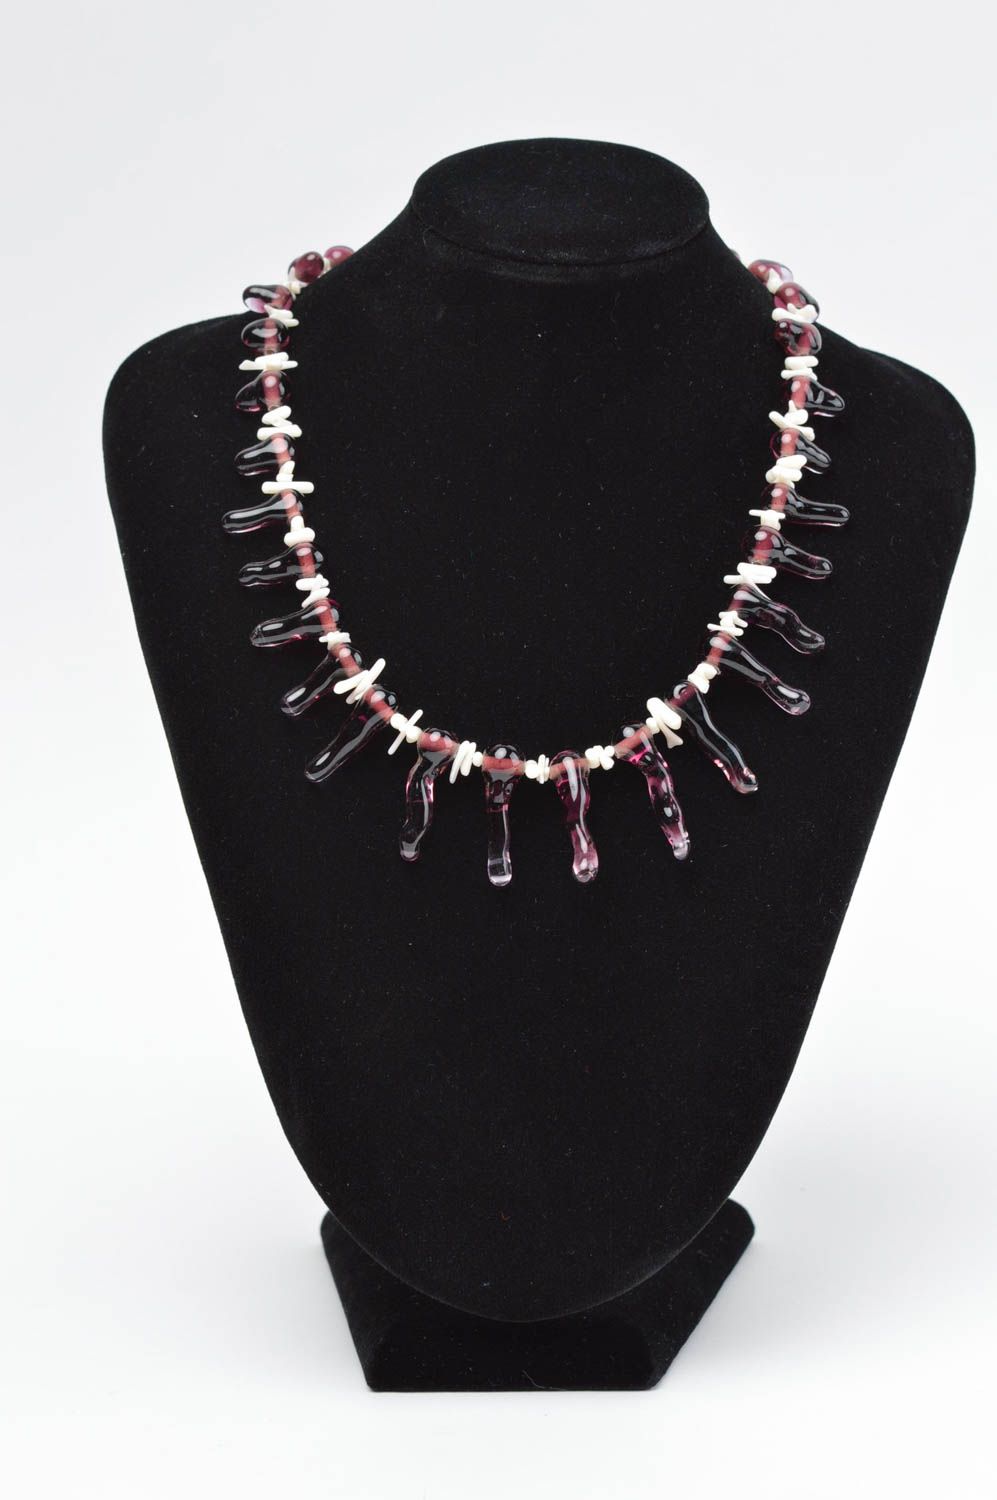 Beautiful handmade glass bead necklace beadwork ideas accessories for girls photo 1